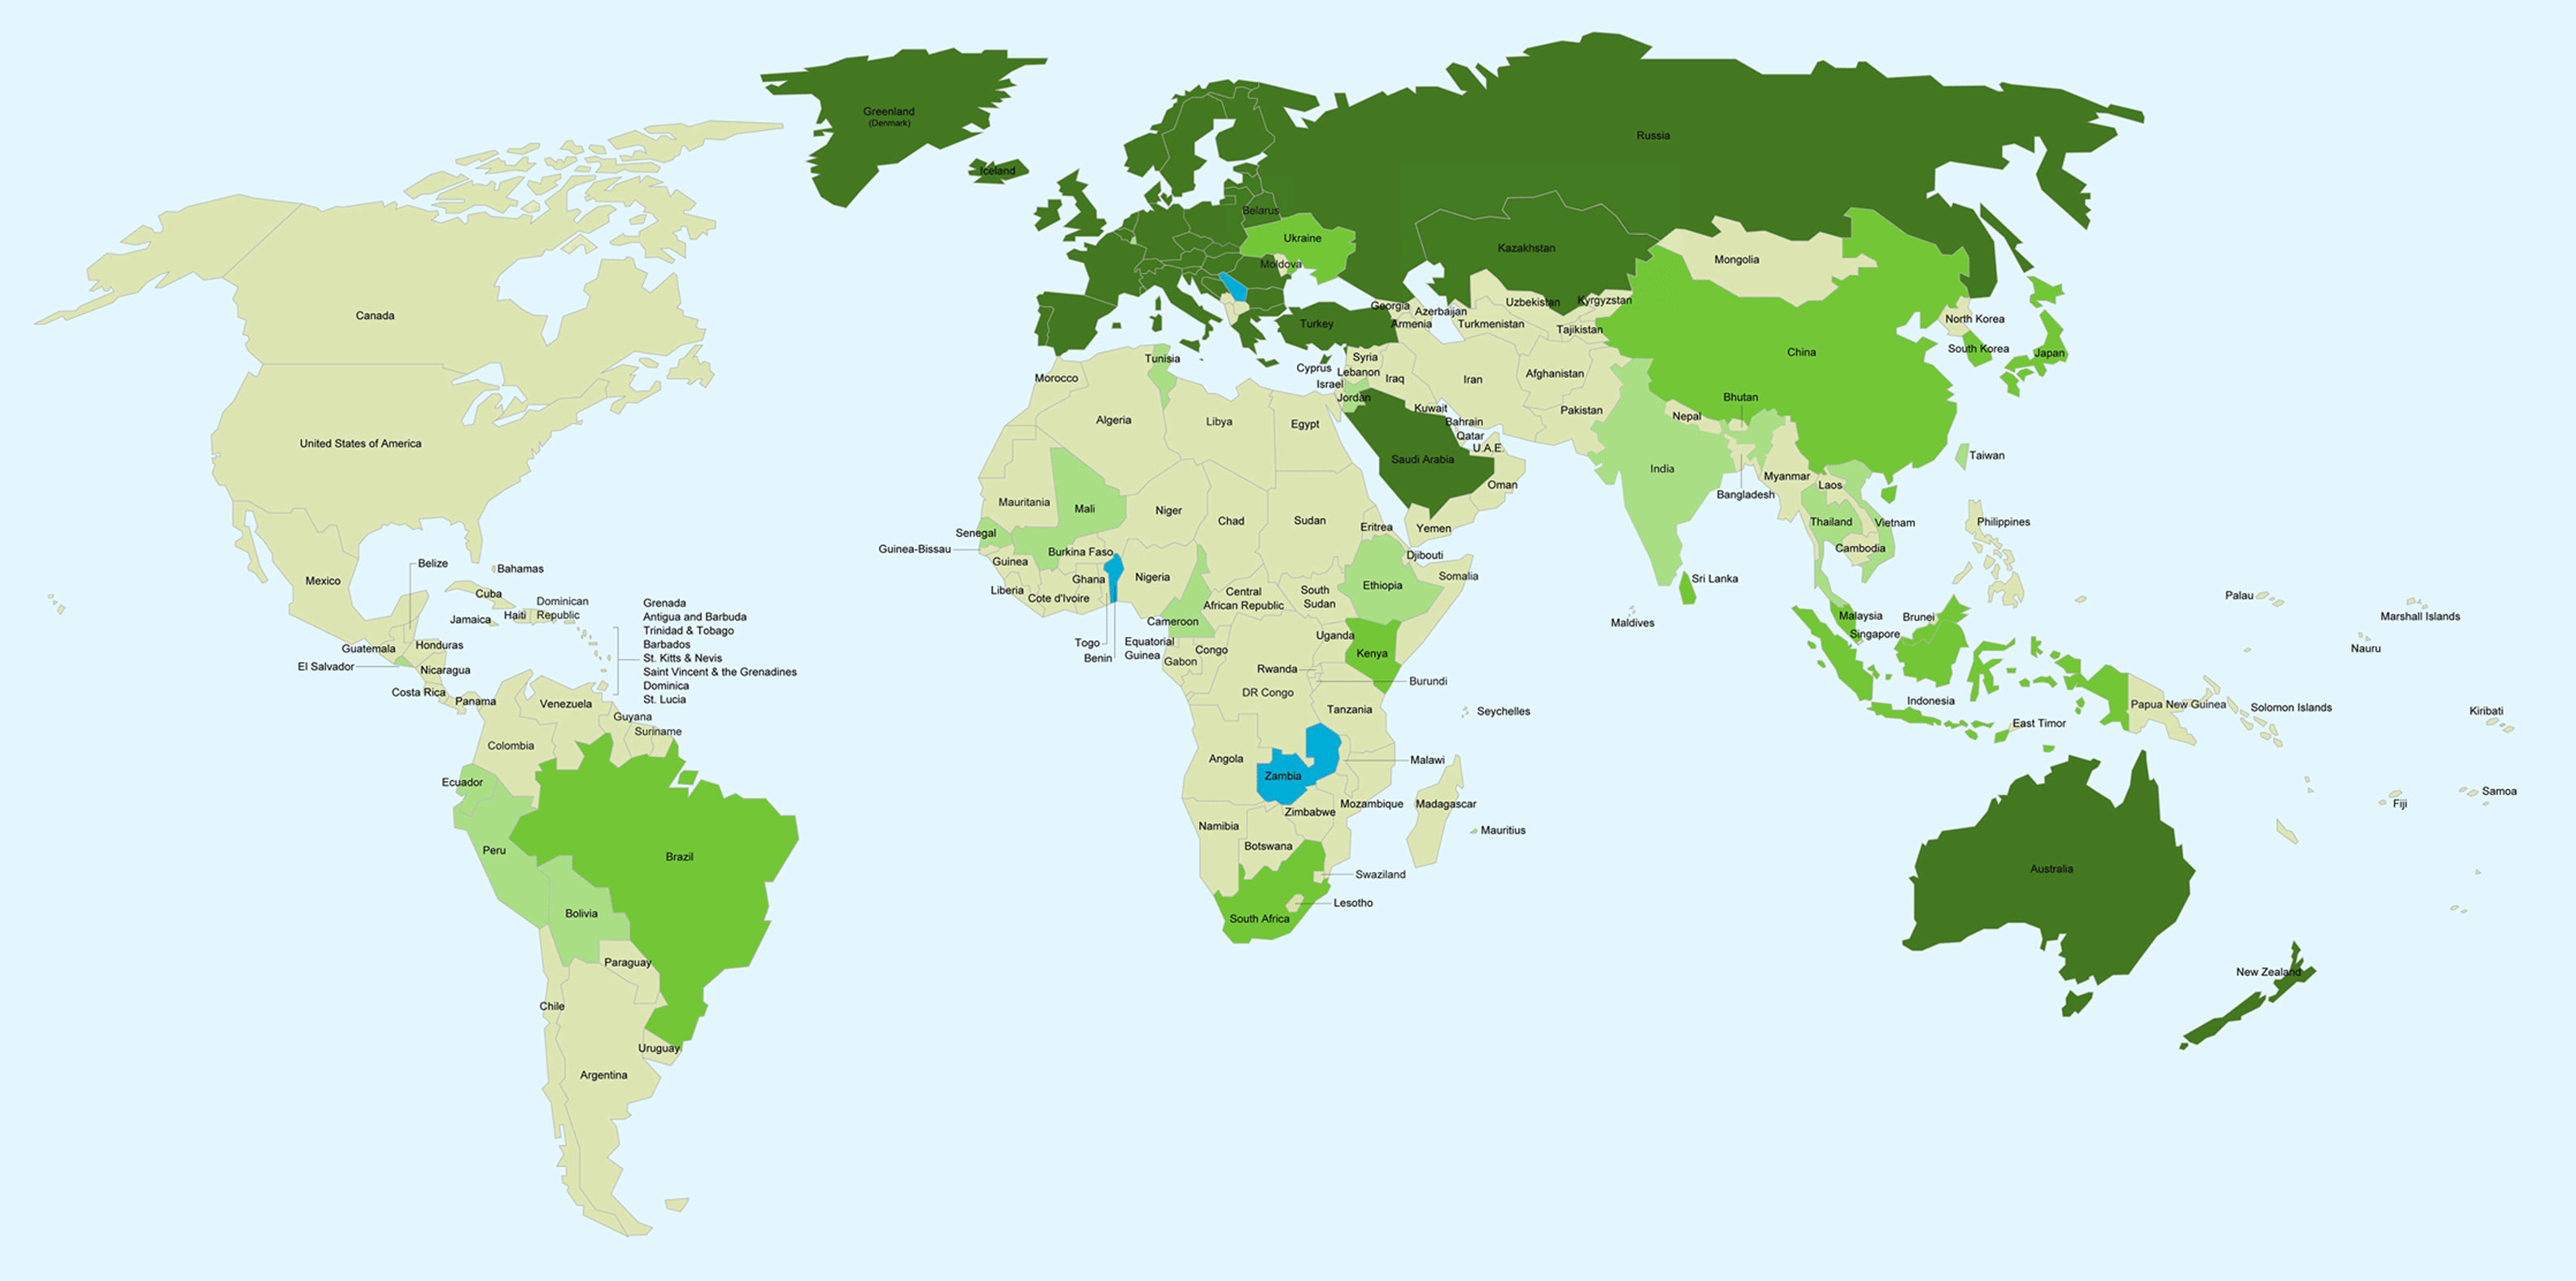 map_world